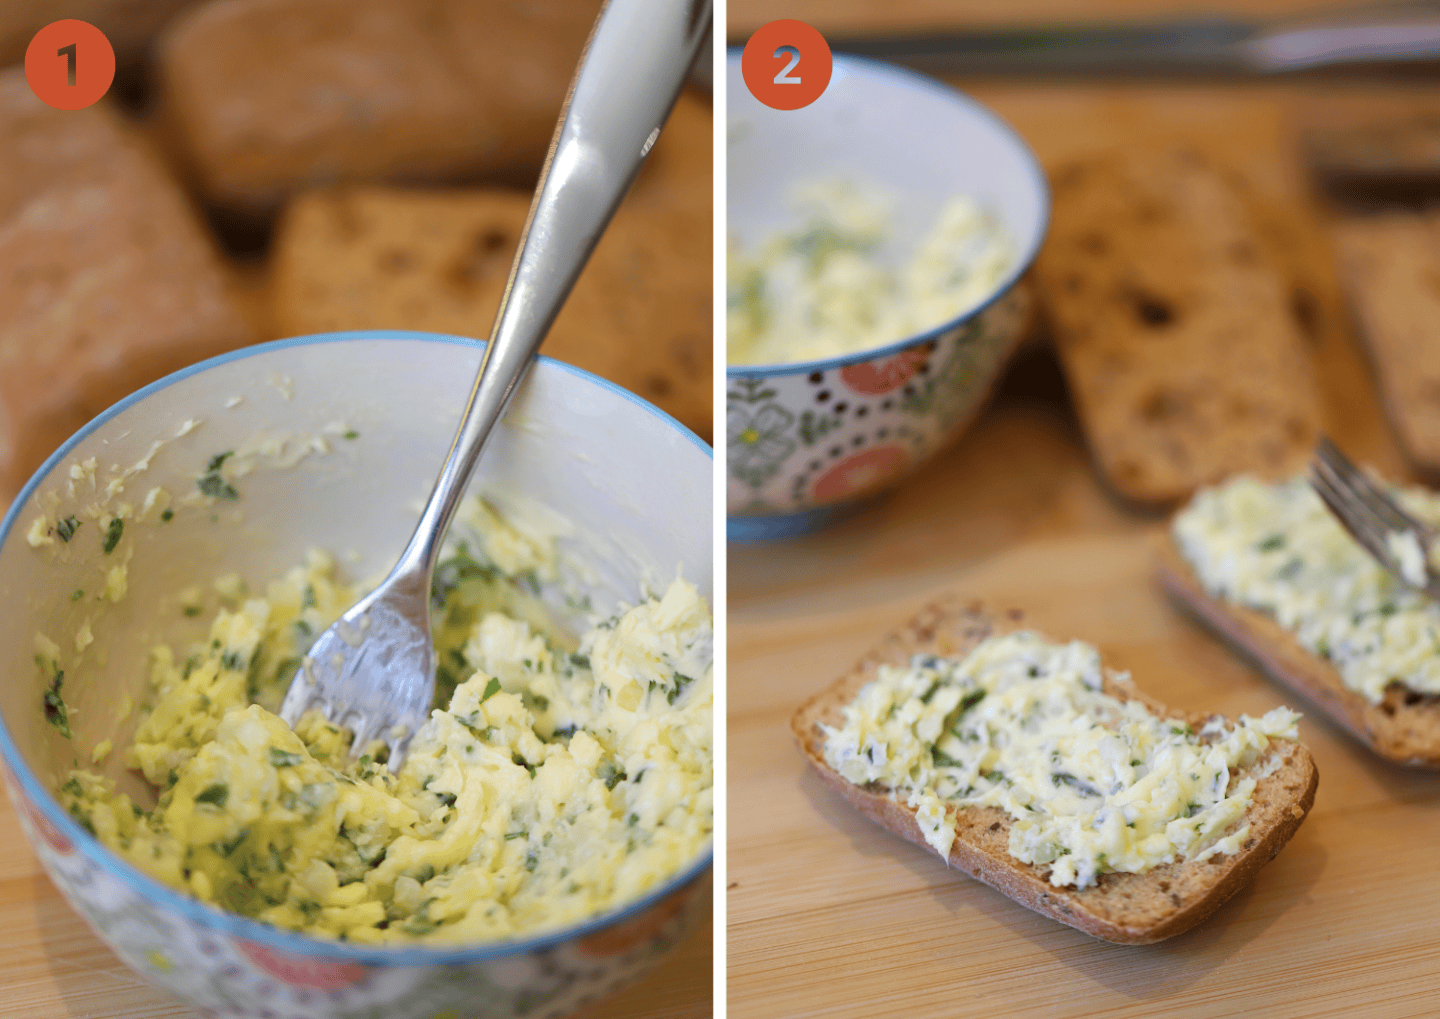 The garlic butter mixture and garlic butter spread on gluten free bread.